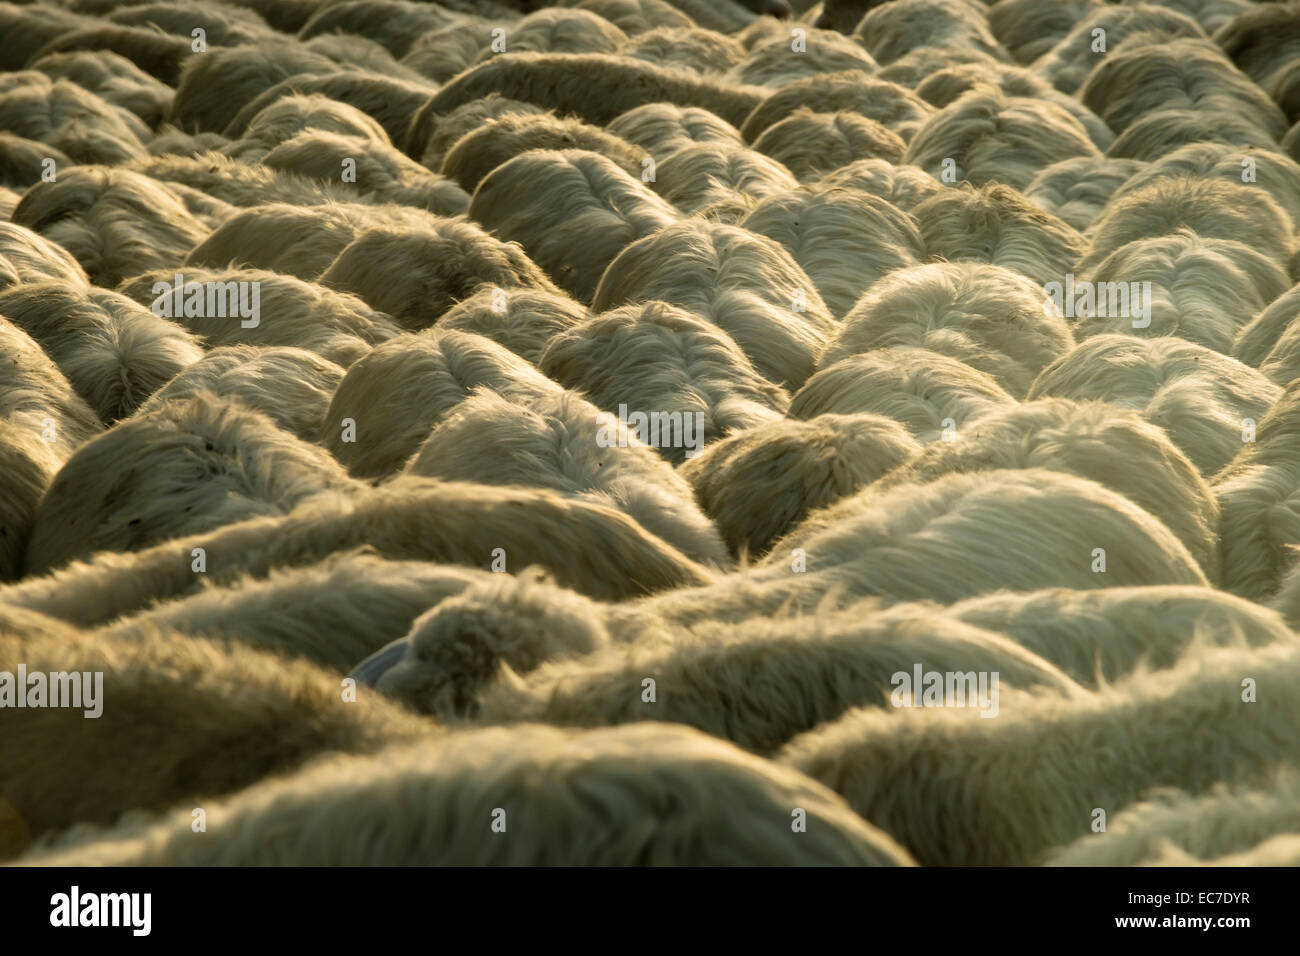 Italy, Tuscany, flock of sheep on a road Stock Photo